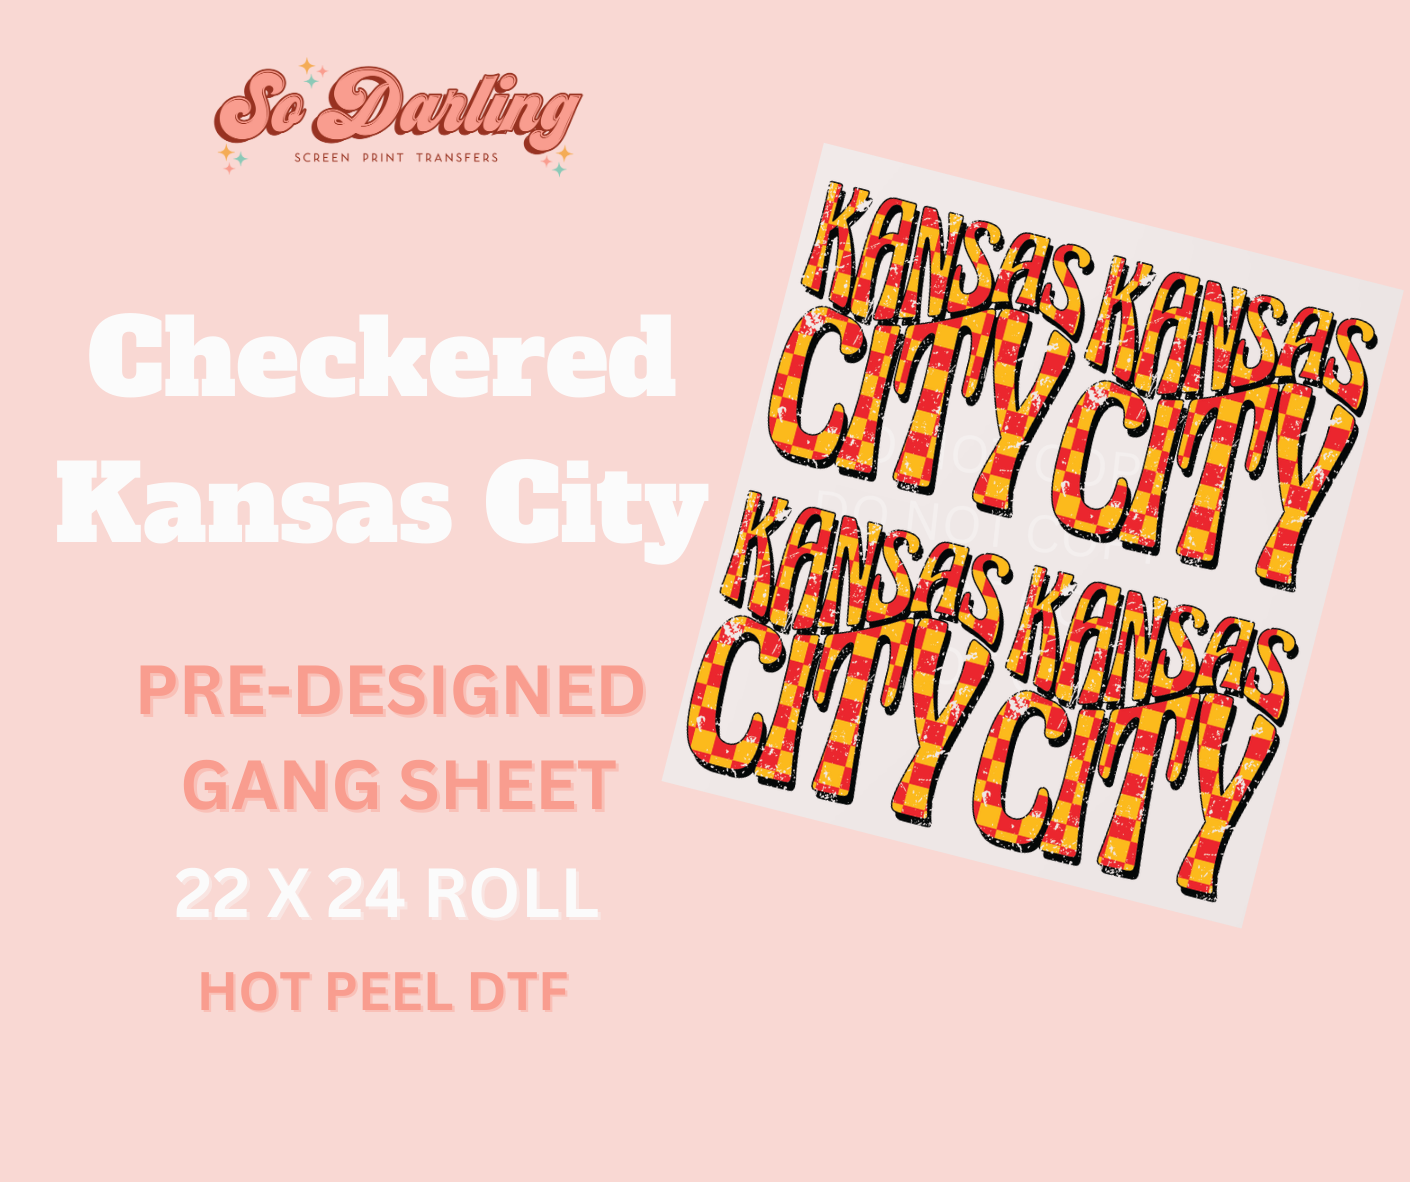 pre-designed CHECKERED KANSAS CITY dtf gang sheet - 1-2 business day TAT